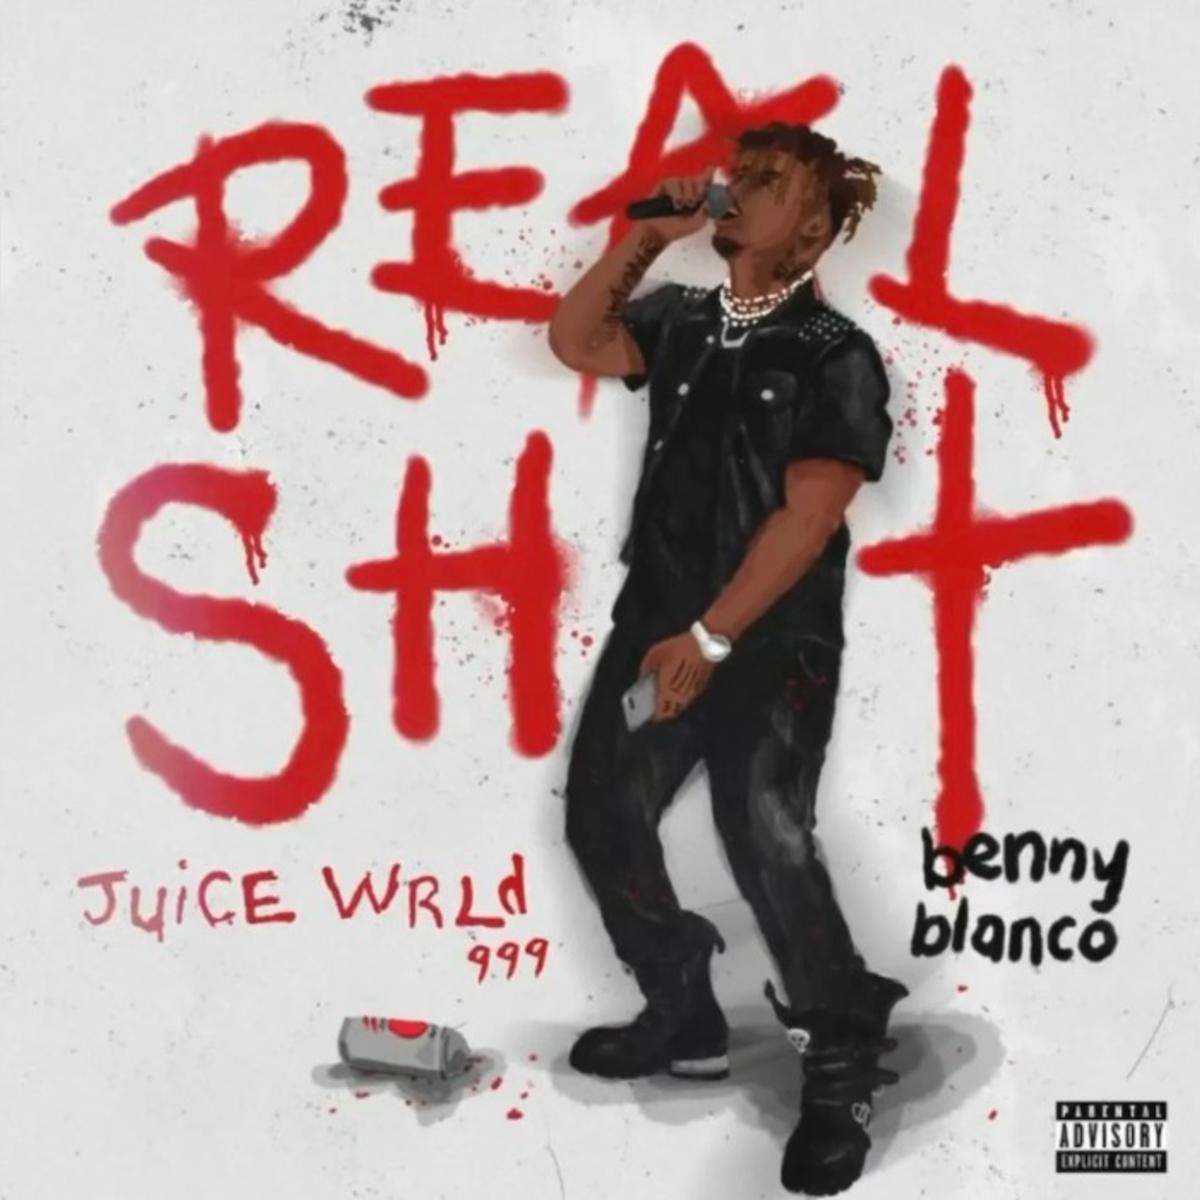 Juice WRLD & Benny Blanco Are On Some “Real Shit” On New Posthumous Single